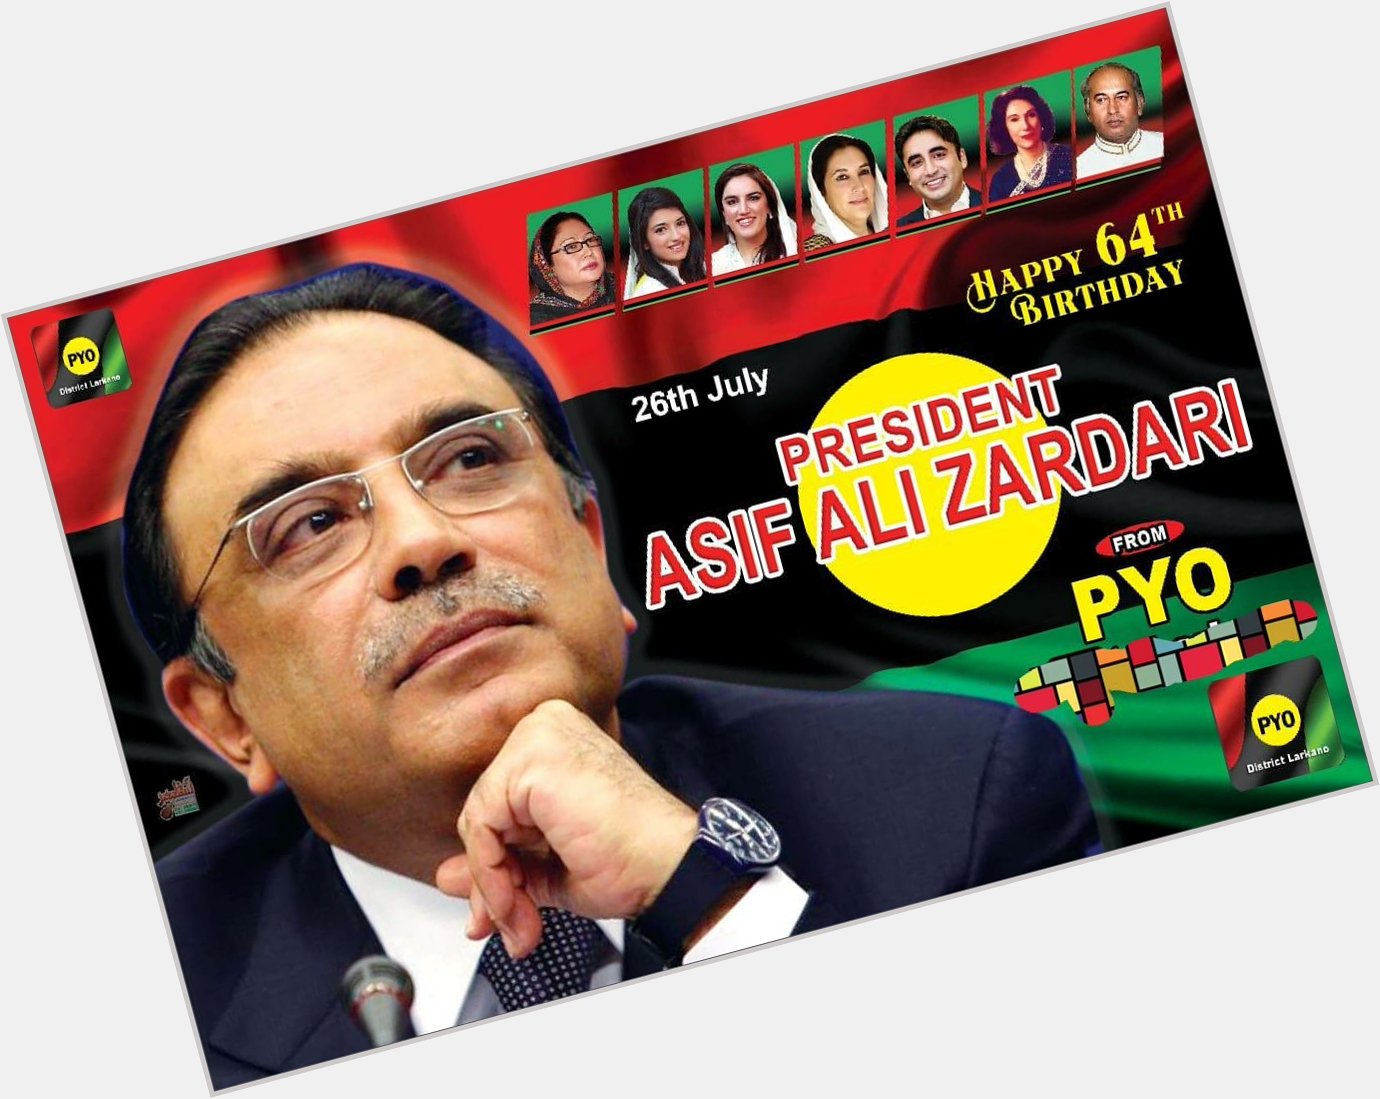 Happy Birthday President Asif Ali Zardari saviour of Democracy. Long Live 